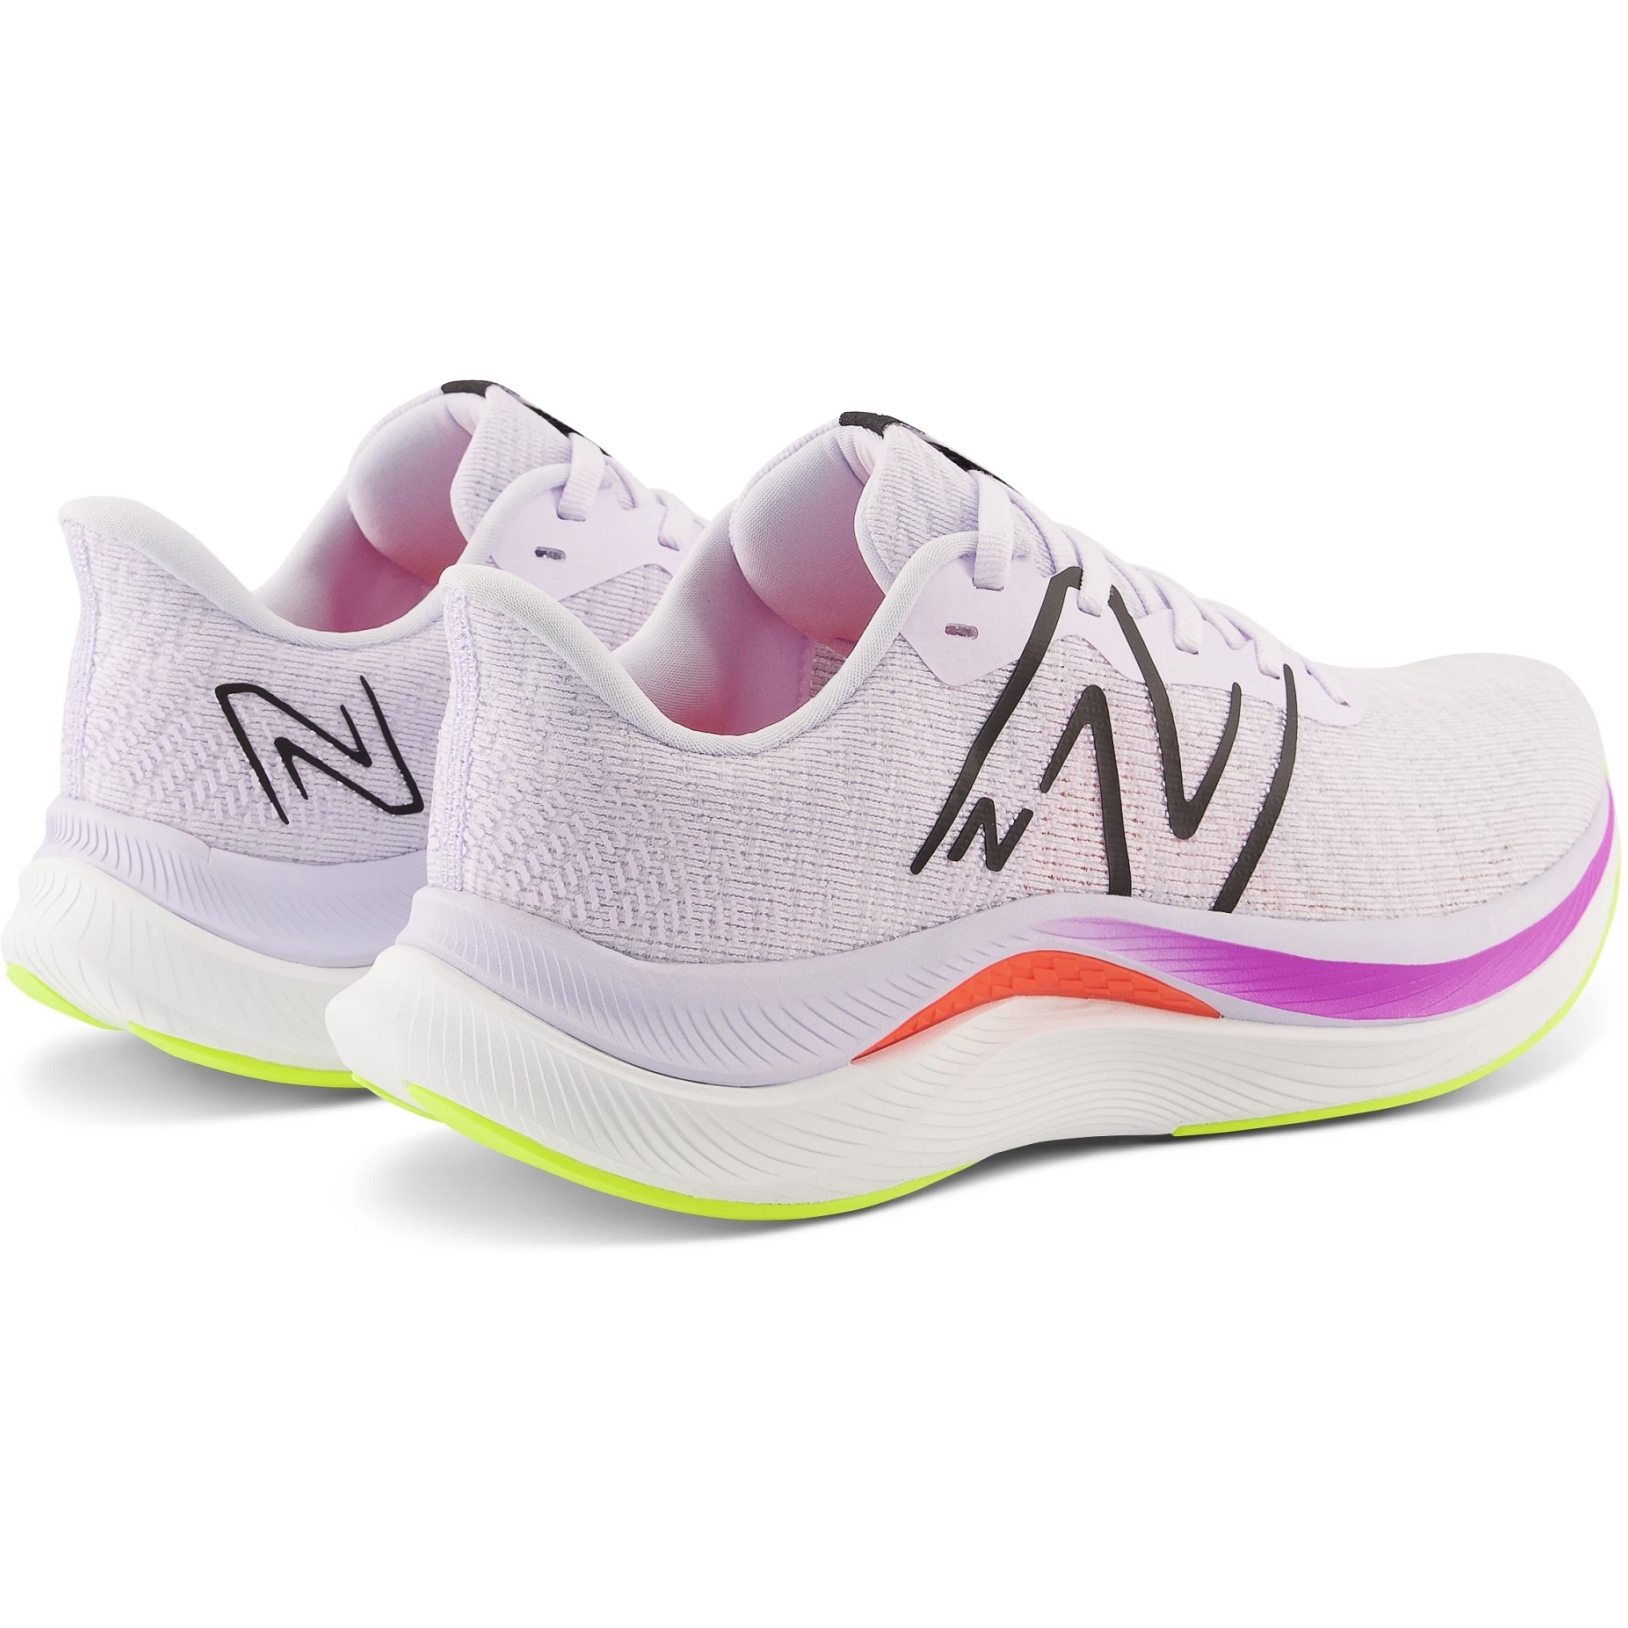 New Balance FuelCell Propel v4 Women's Running Shoes Libra BIKE24